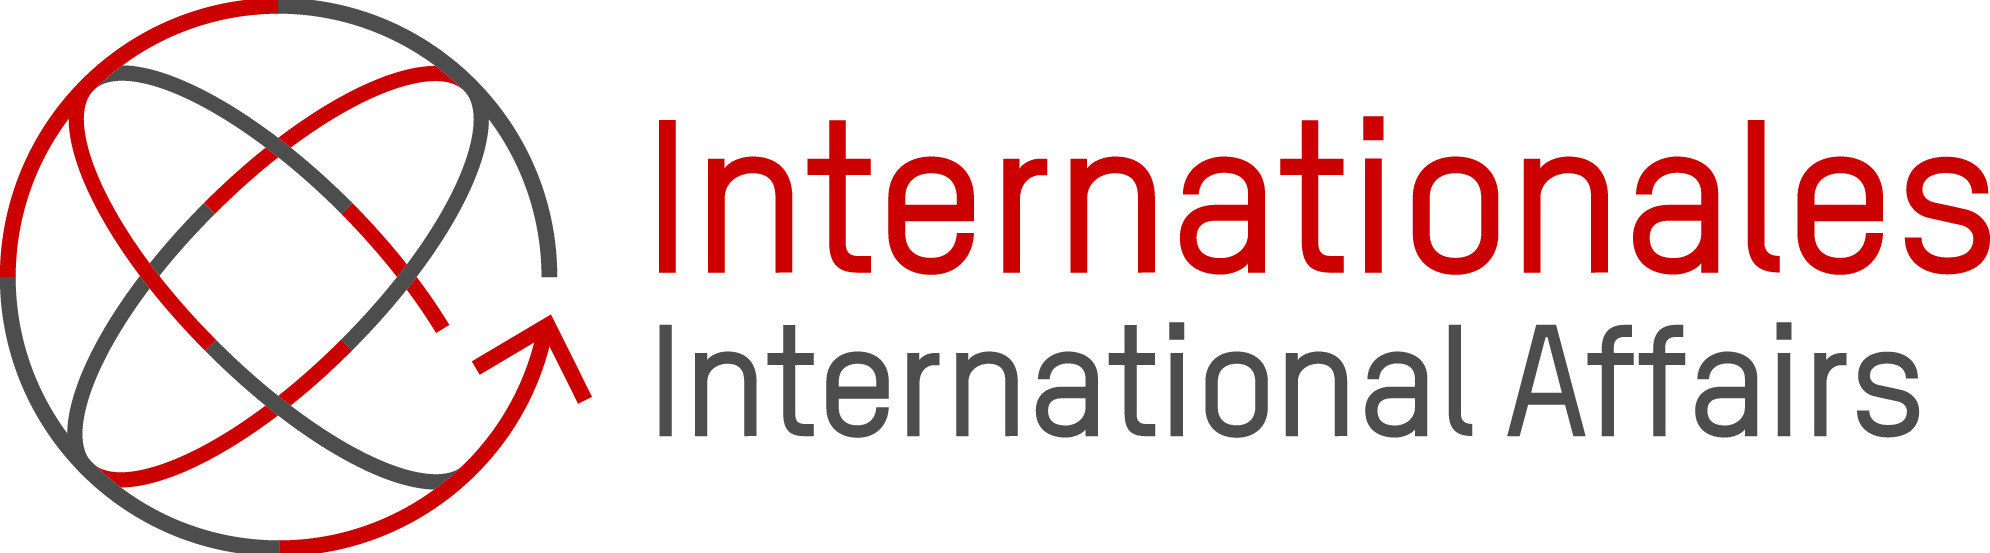 Logo_TU_Internationales_CMYK_vorab.jpg